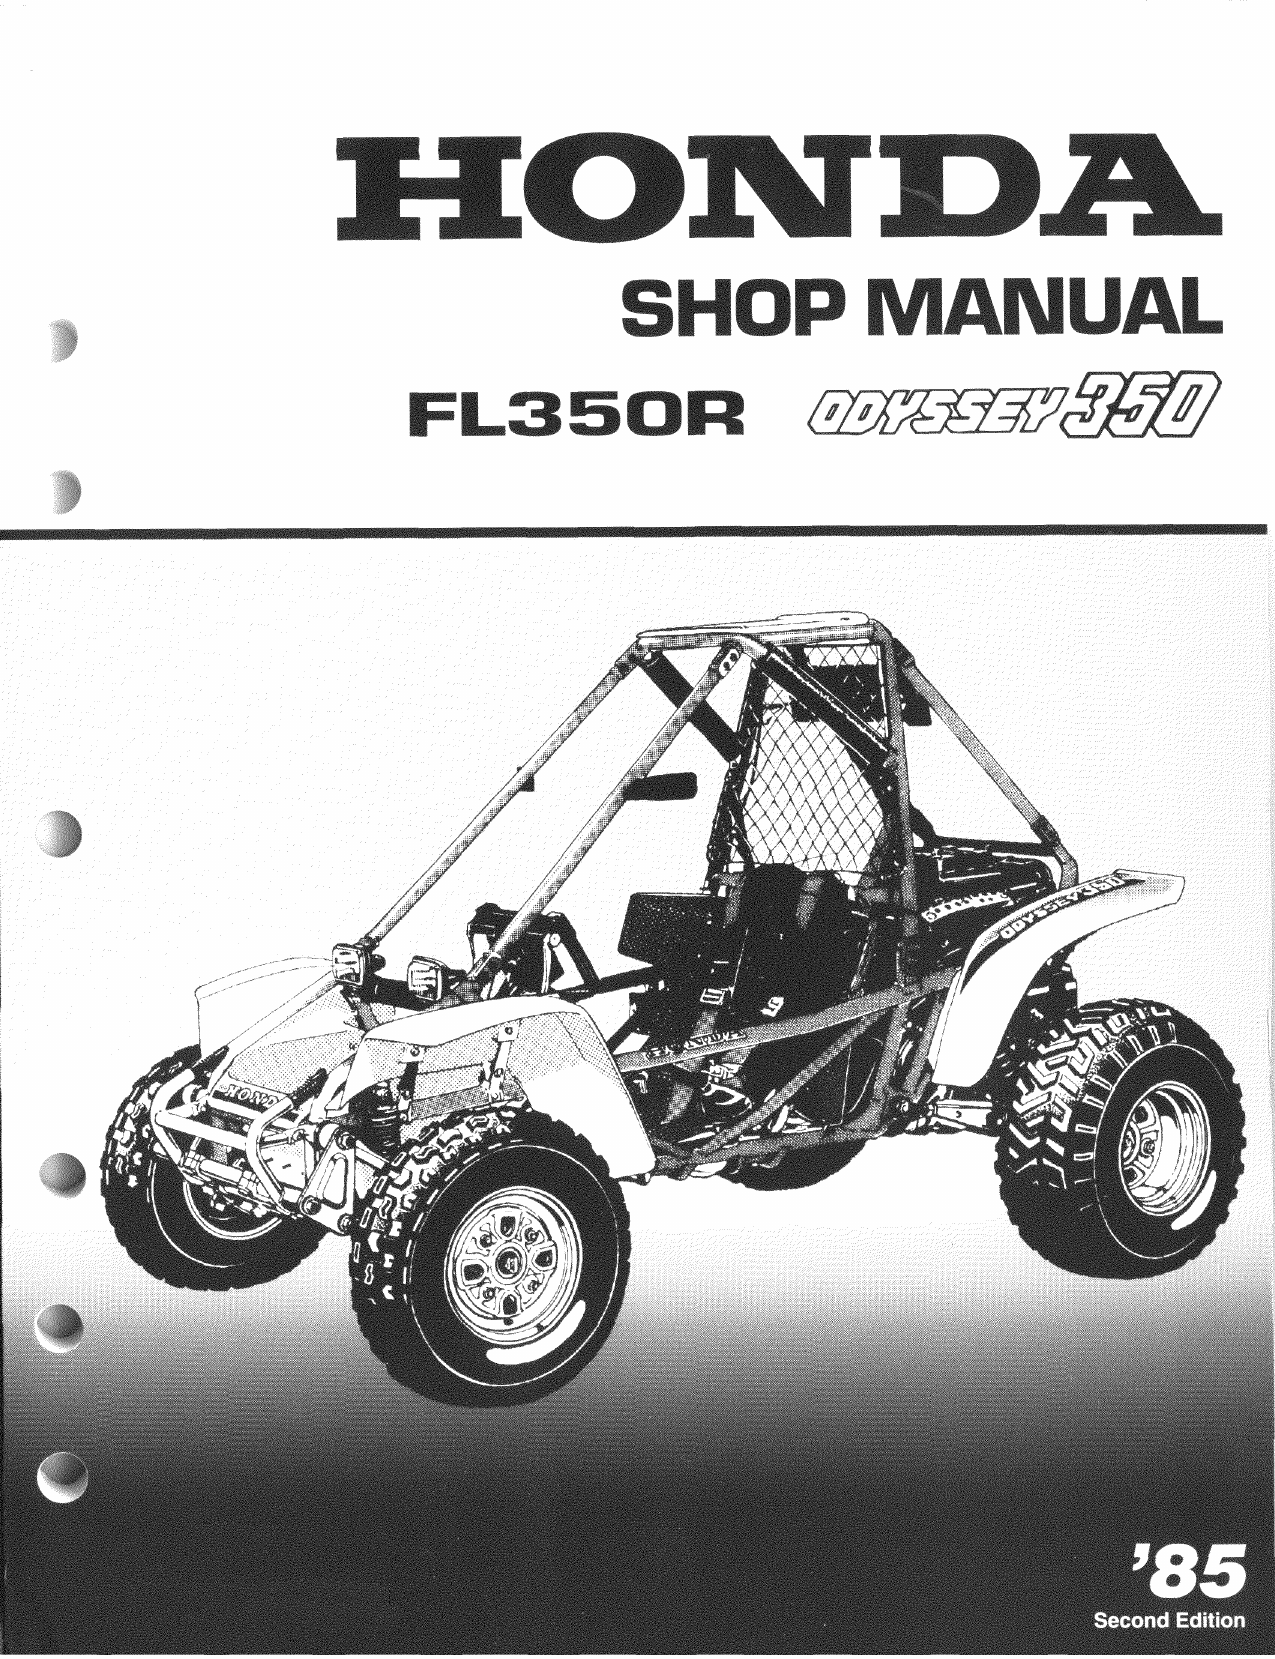 1985 Honda Odyssey 350, FL350R ATV manual Preview image 1